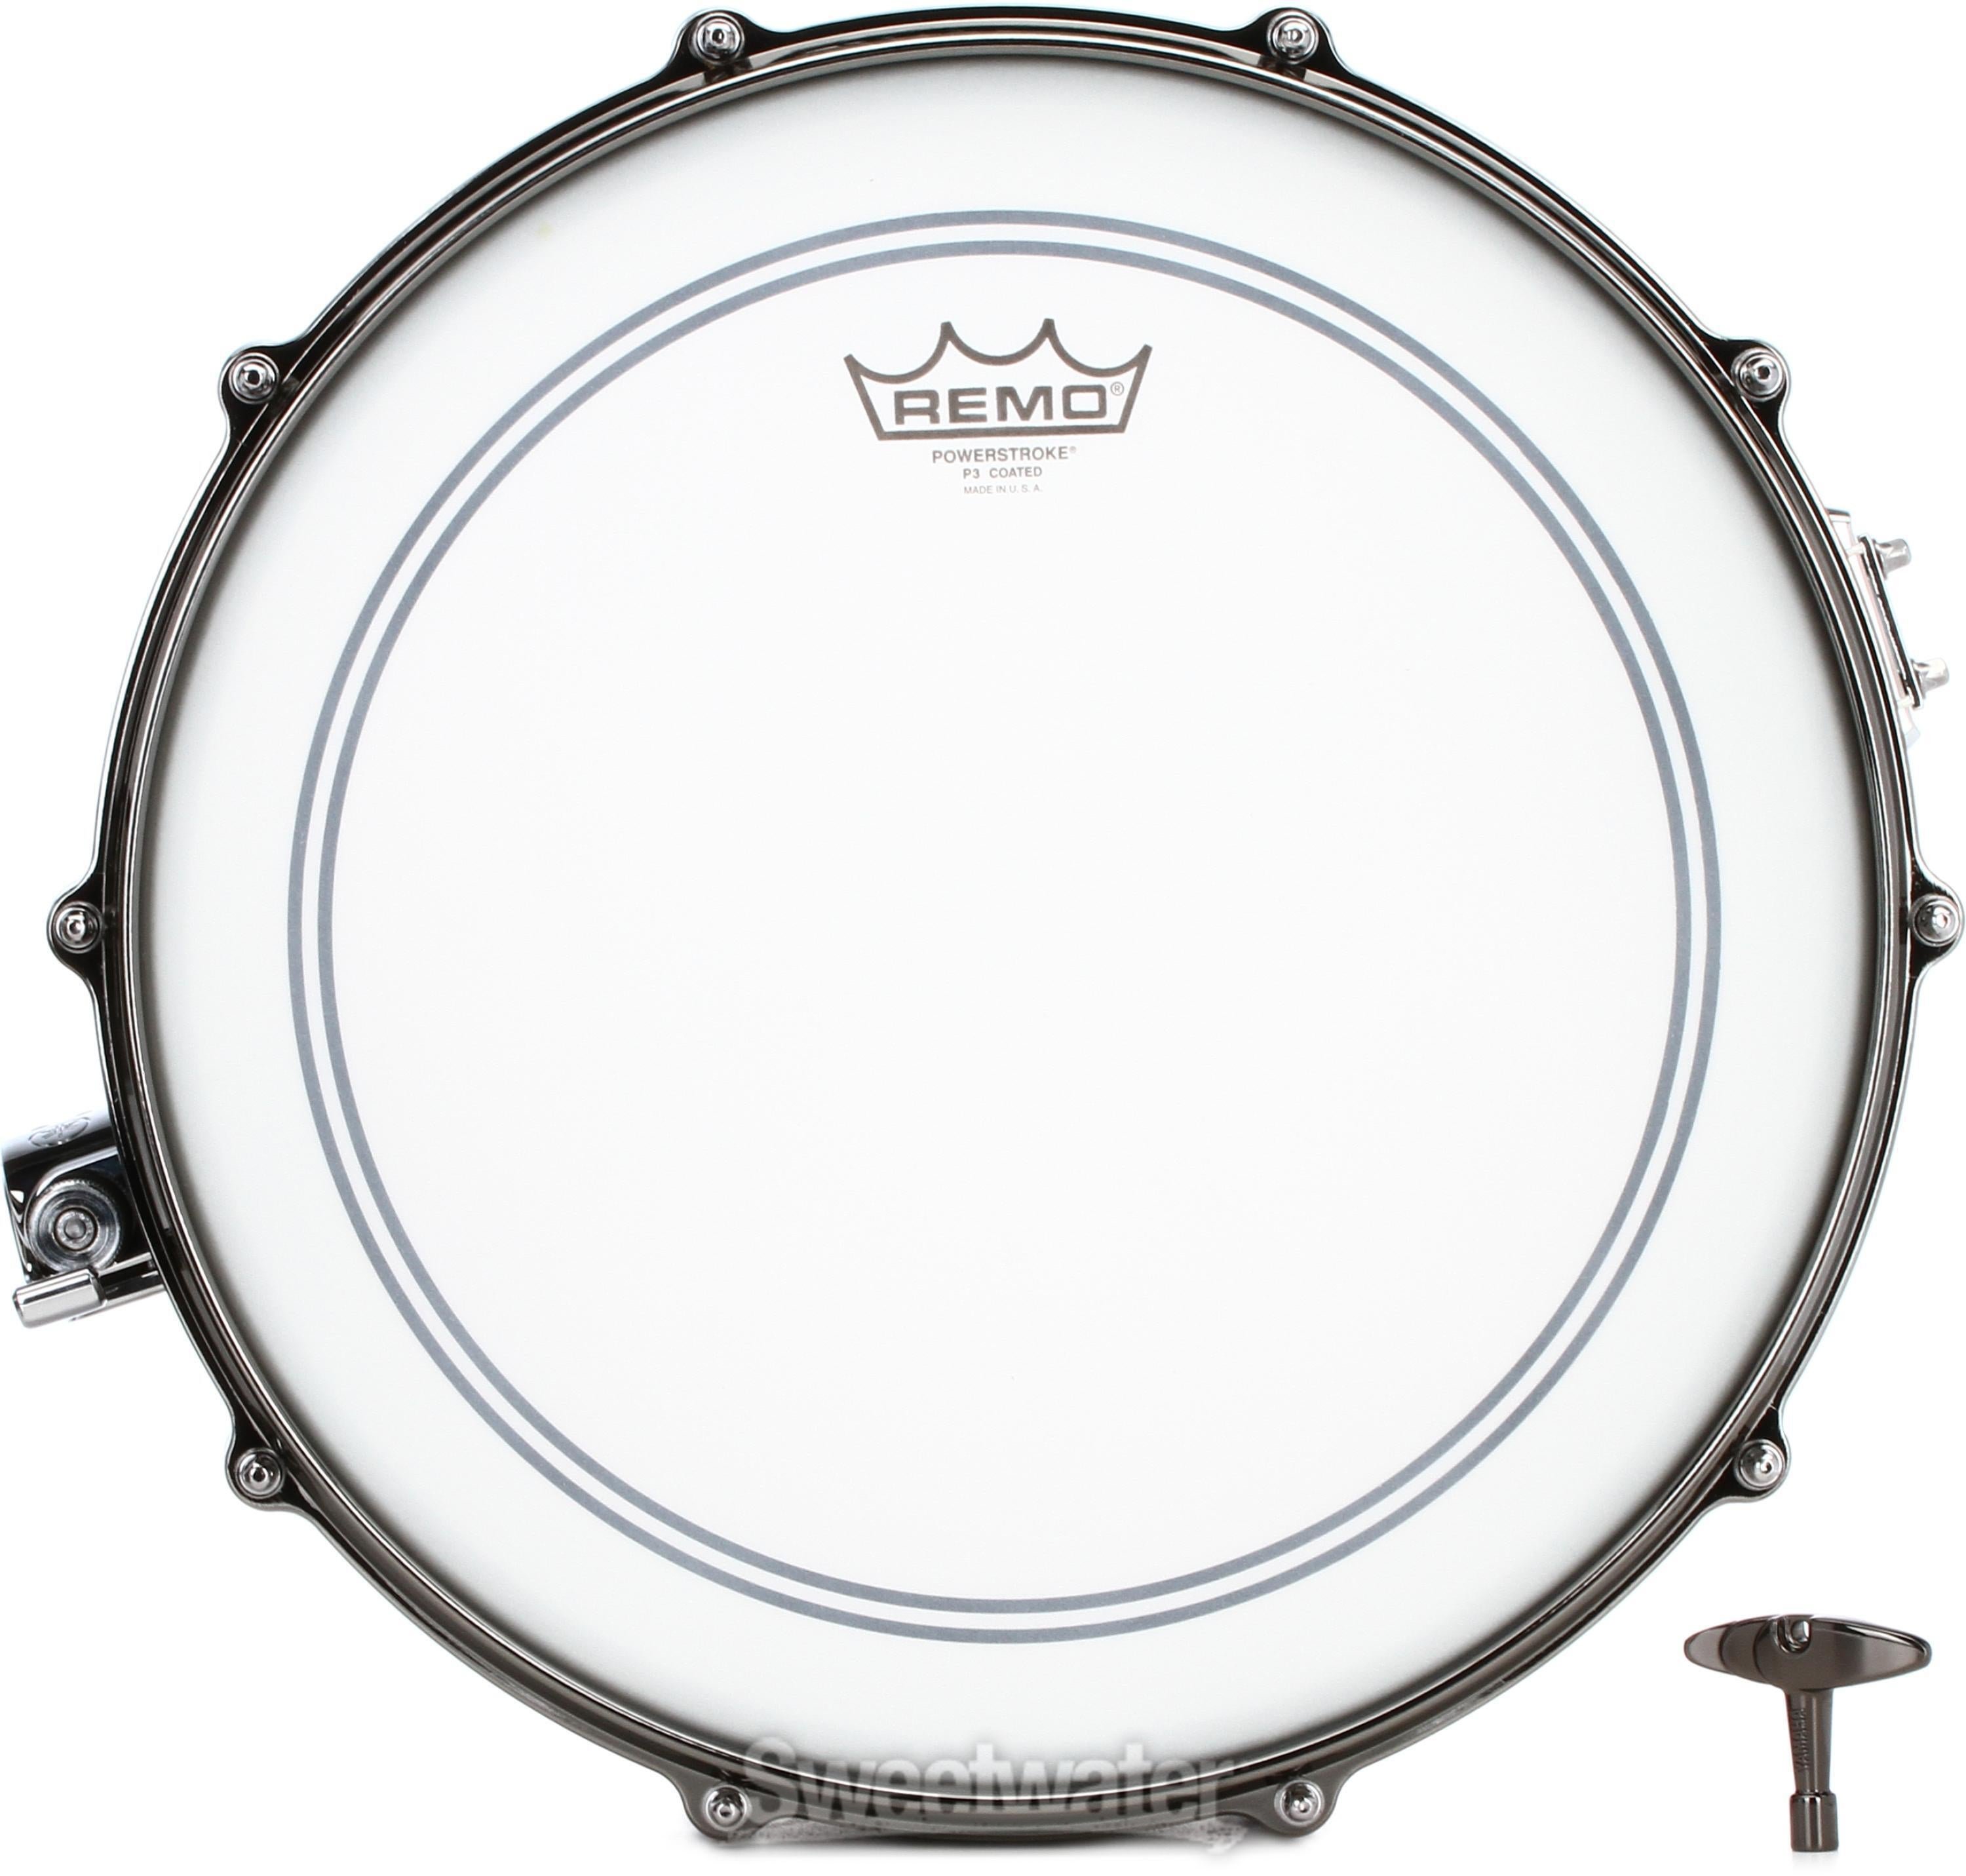 Yamaha Steve Gadd Signature Snare Drum - 5.5 x 14 inch - Black 